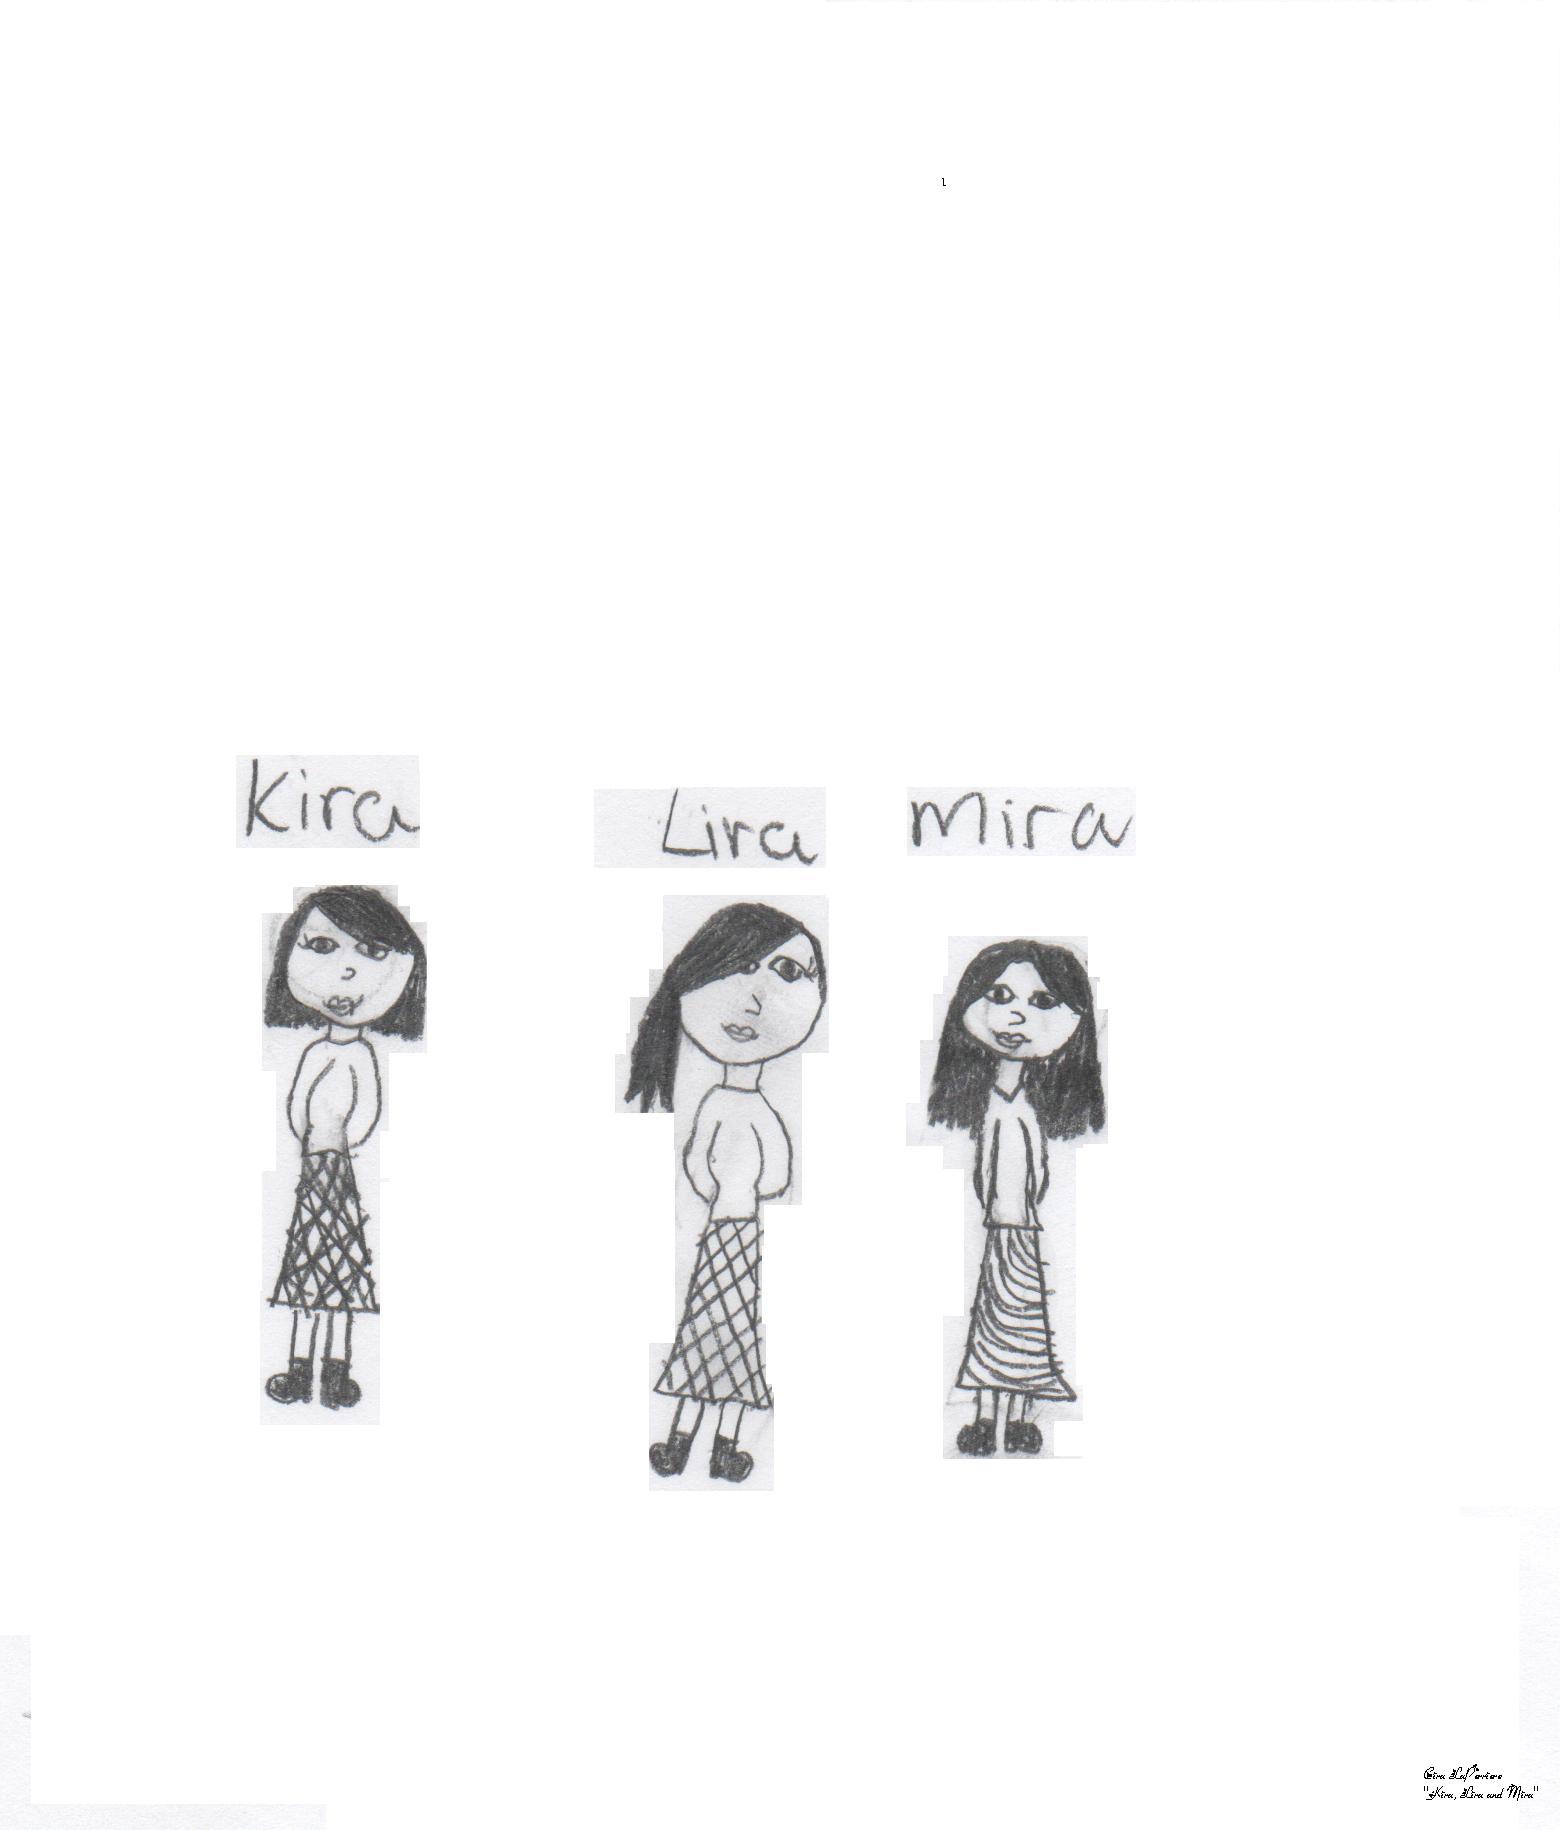 Kira Lira And Mira by horsechica89